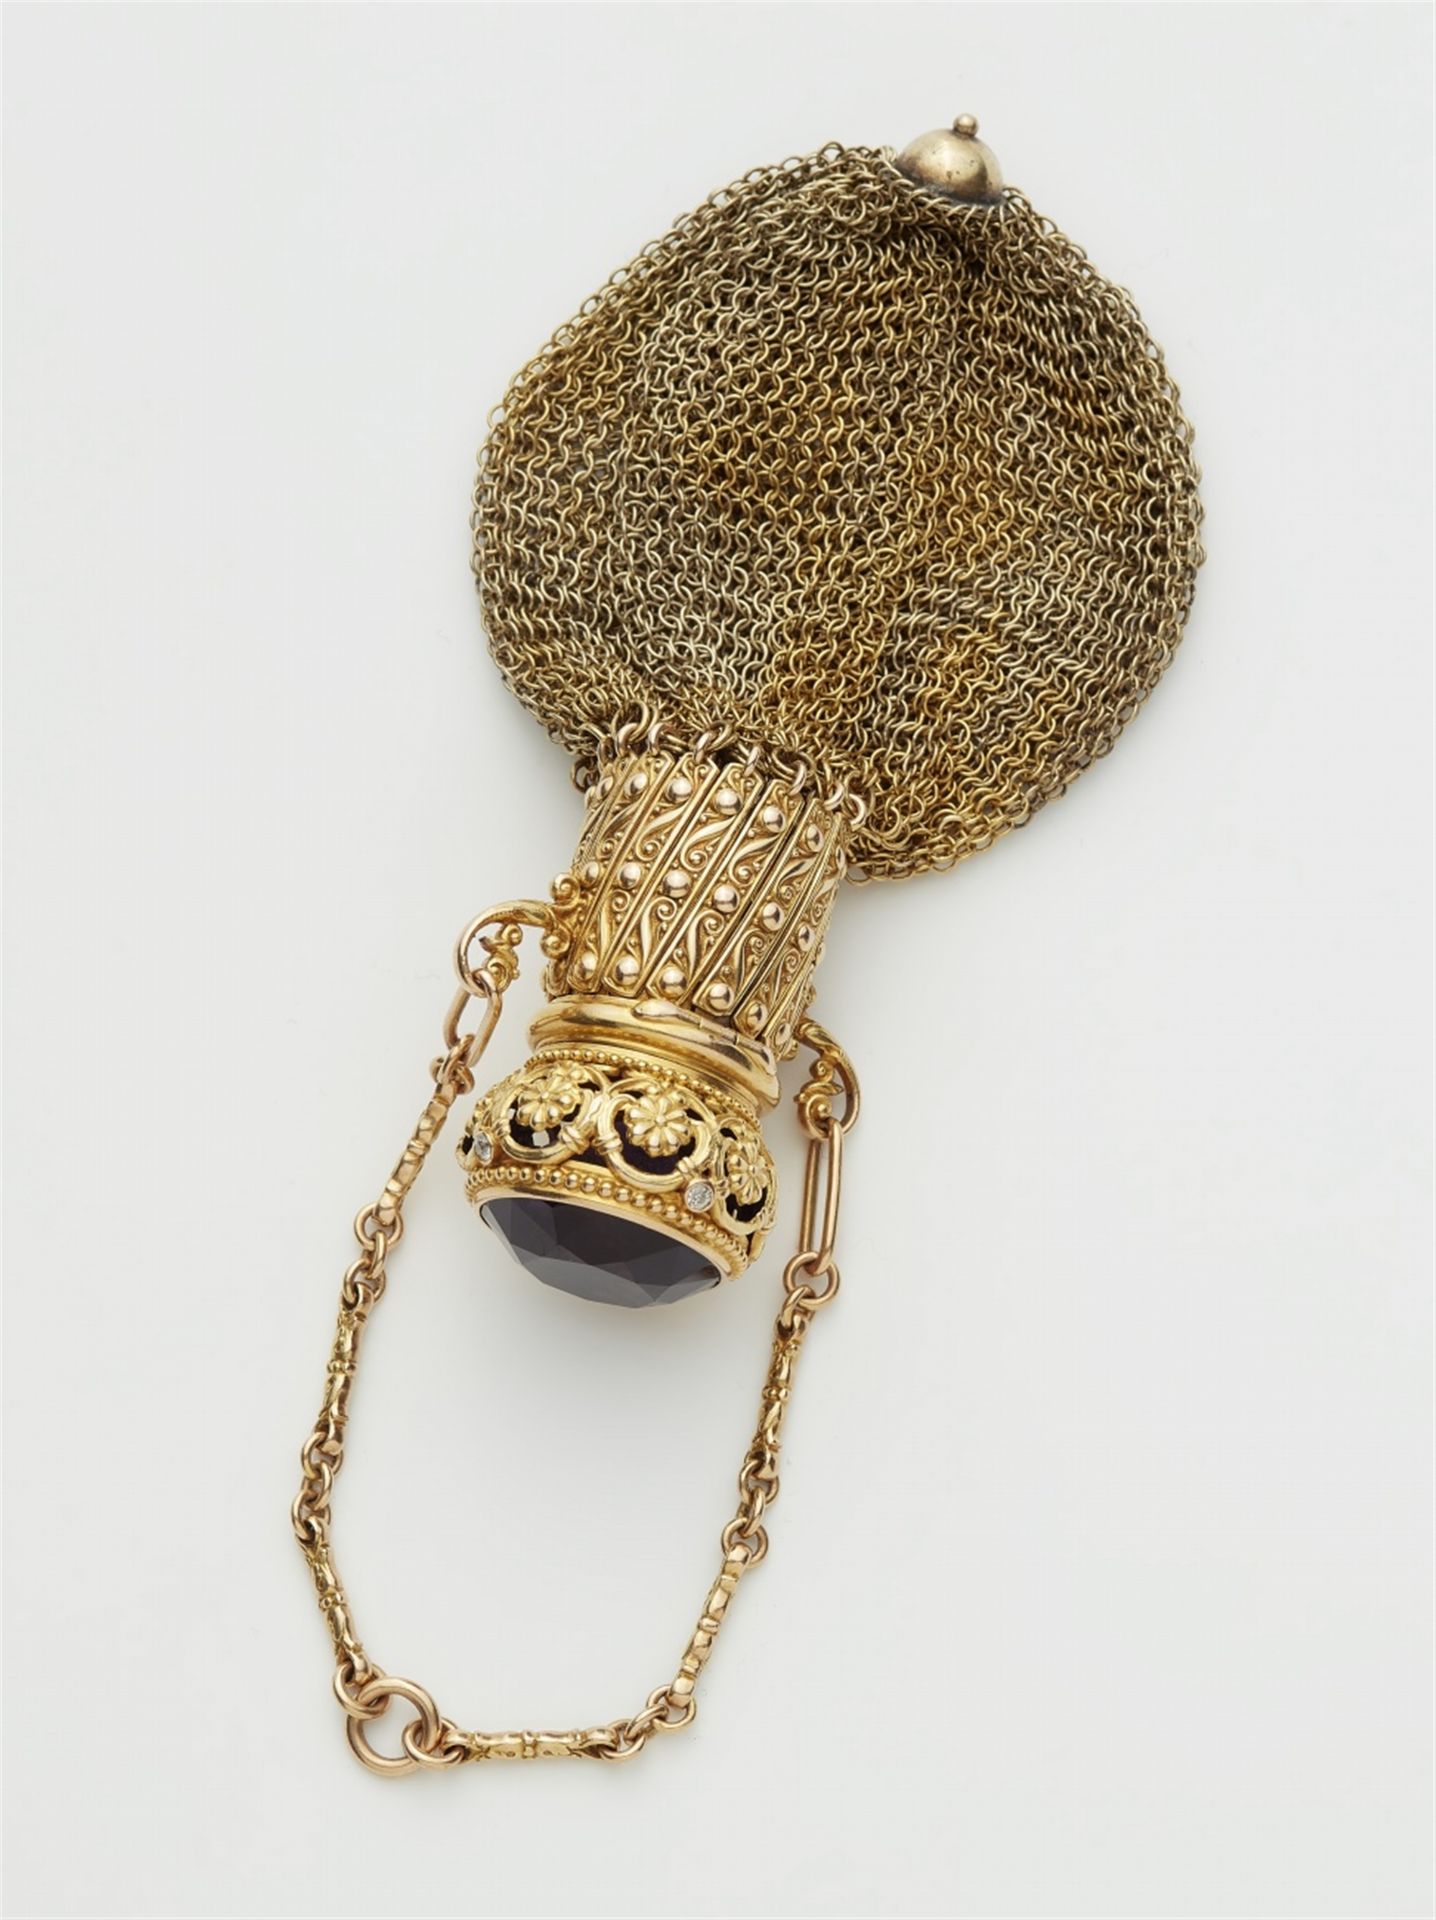 A small 14k woven gold pompadour